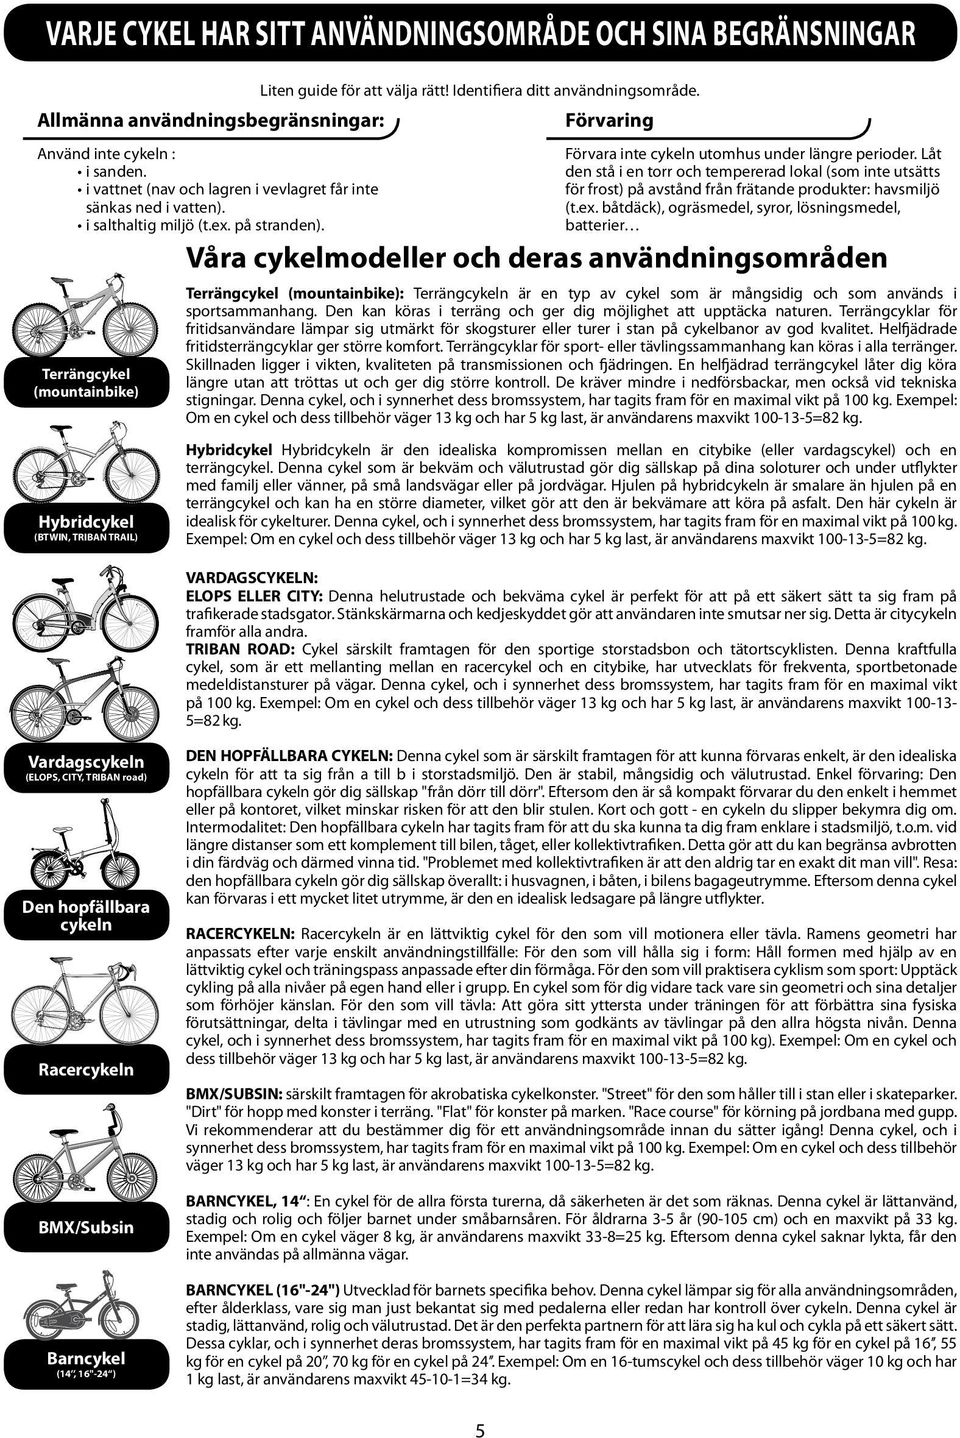 Terrängcykel (mountainbike) Hybridcykel (BTWIN, TRIBAN TRAIL) Förvara inte cykeln utomhus under längre perioder.